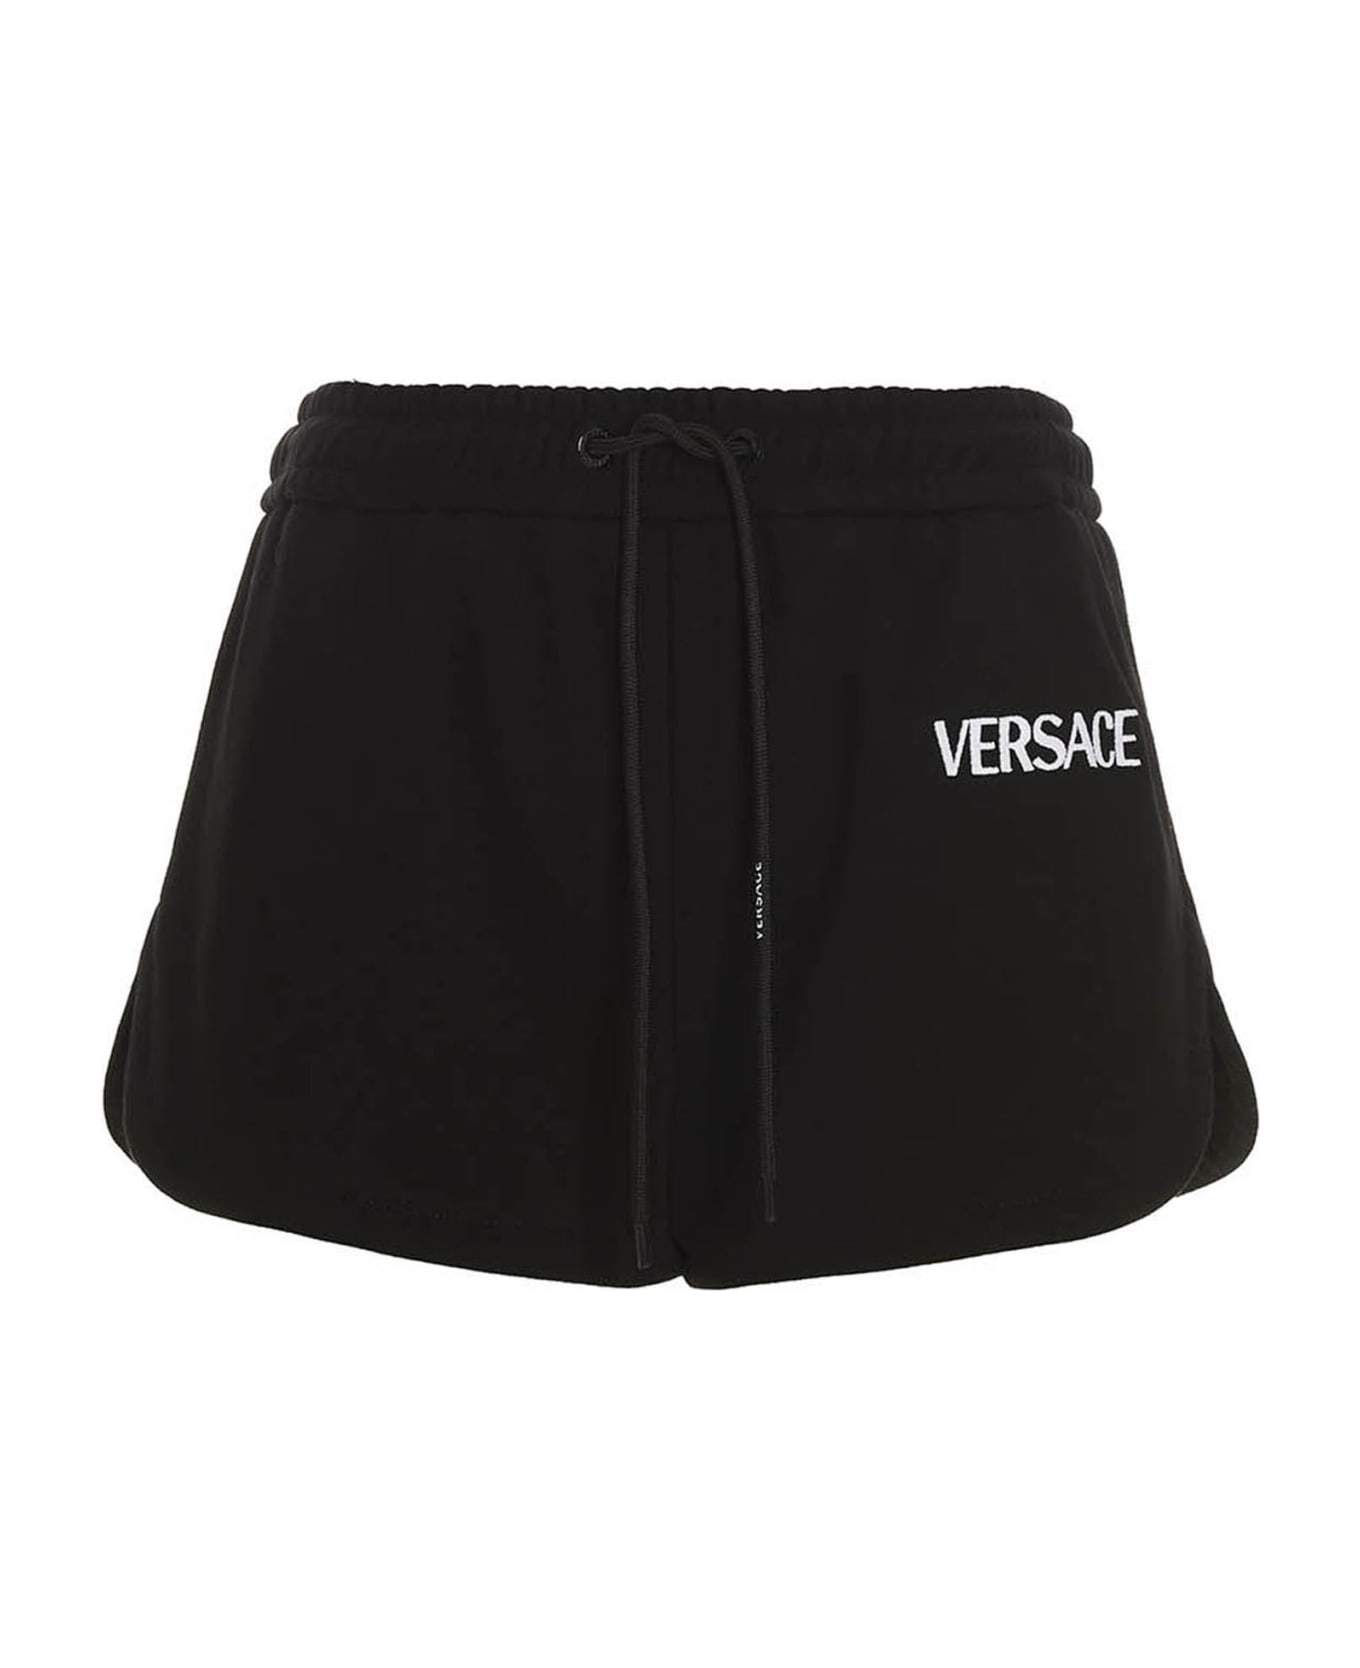 Versace Logo Shorts - Black  